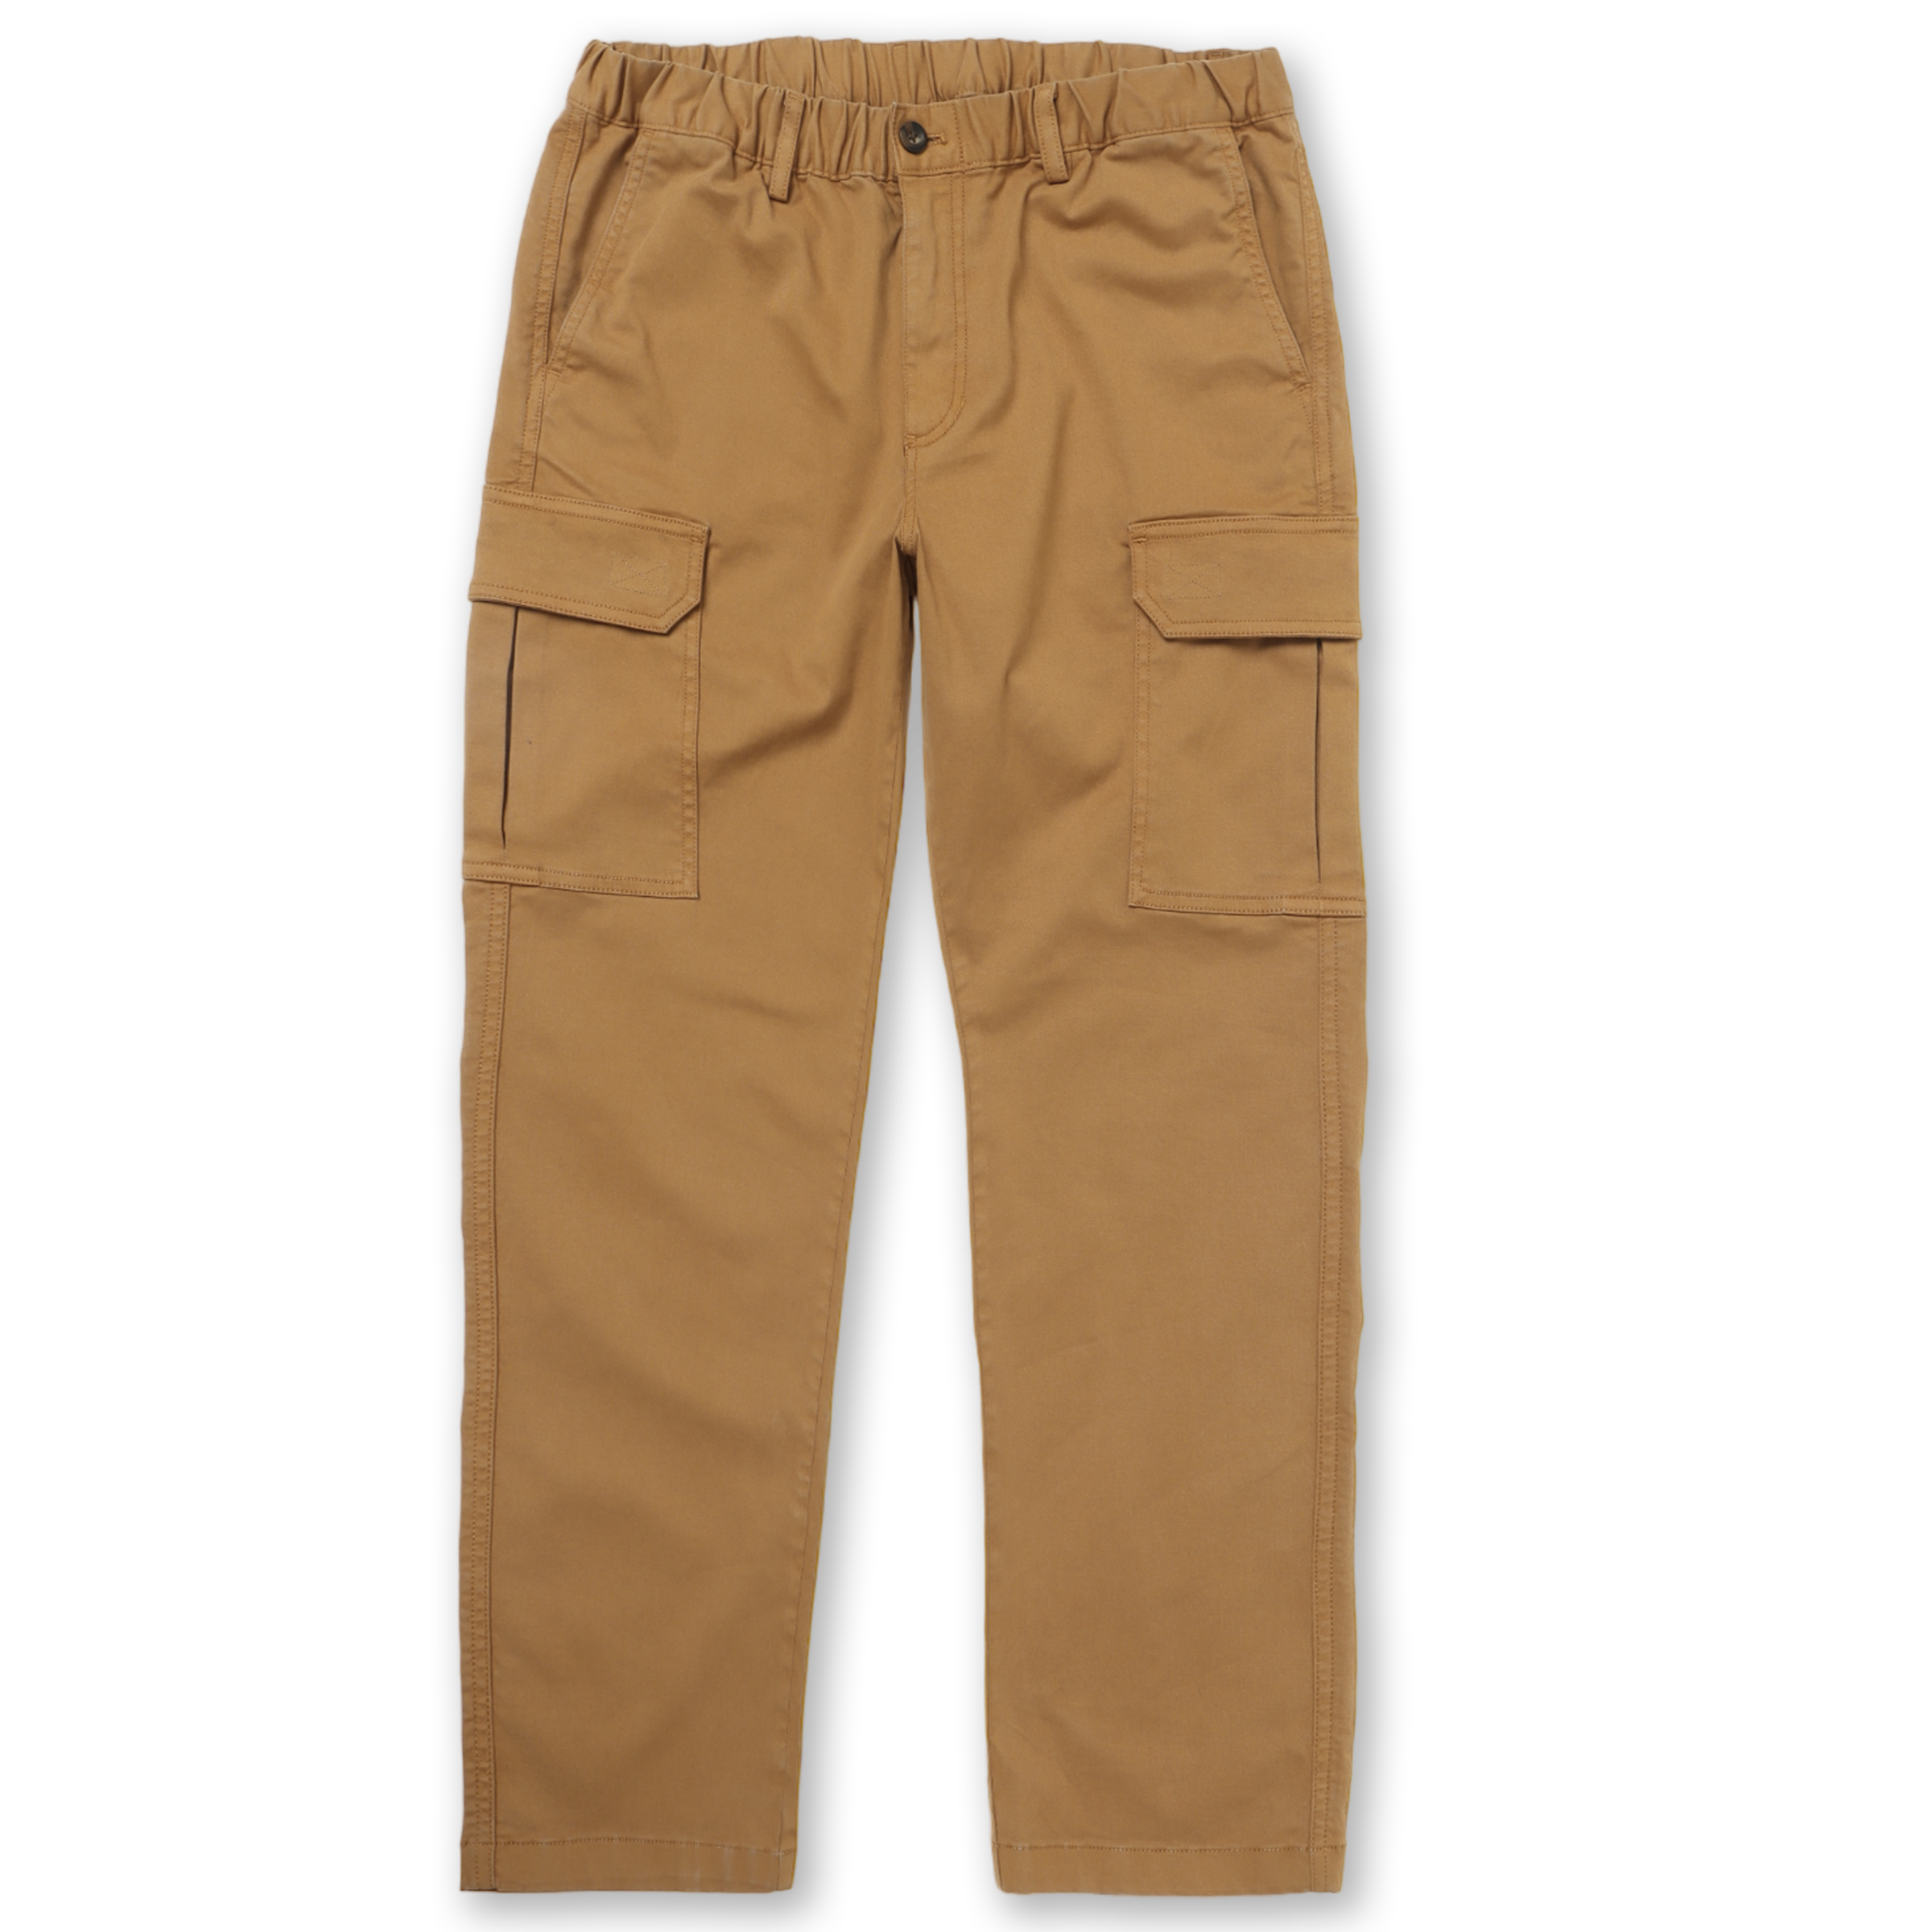 Khaki Cargo Pants With Orange Zipper At Bottom